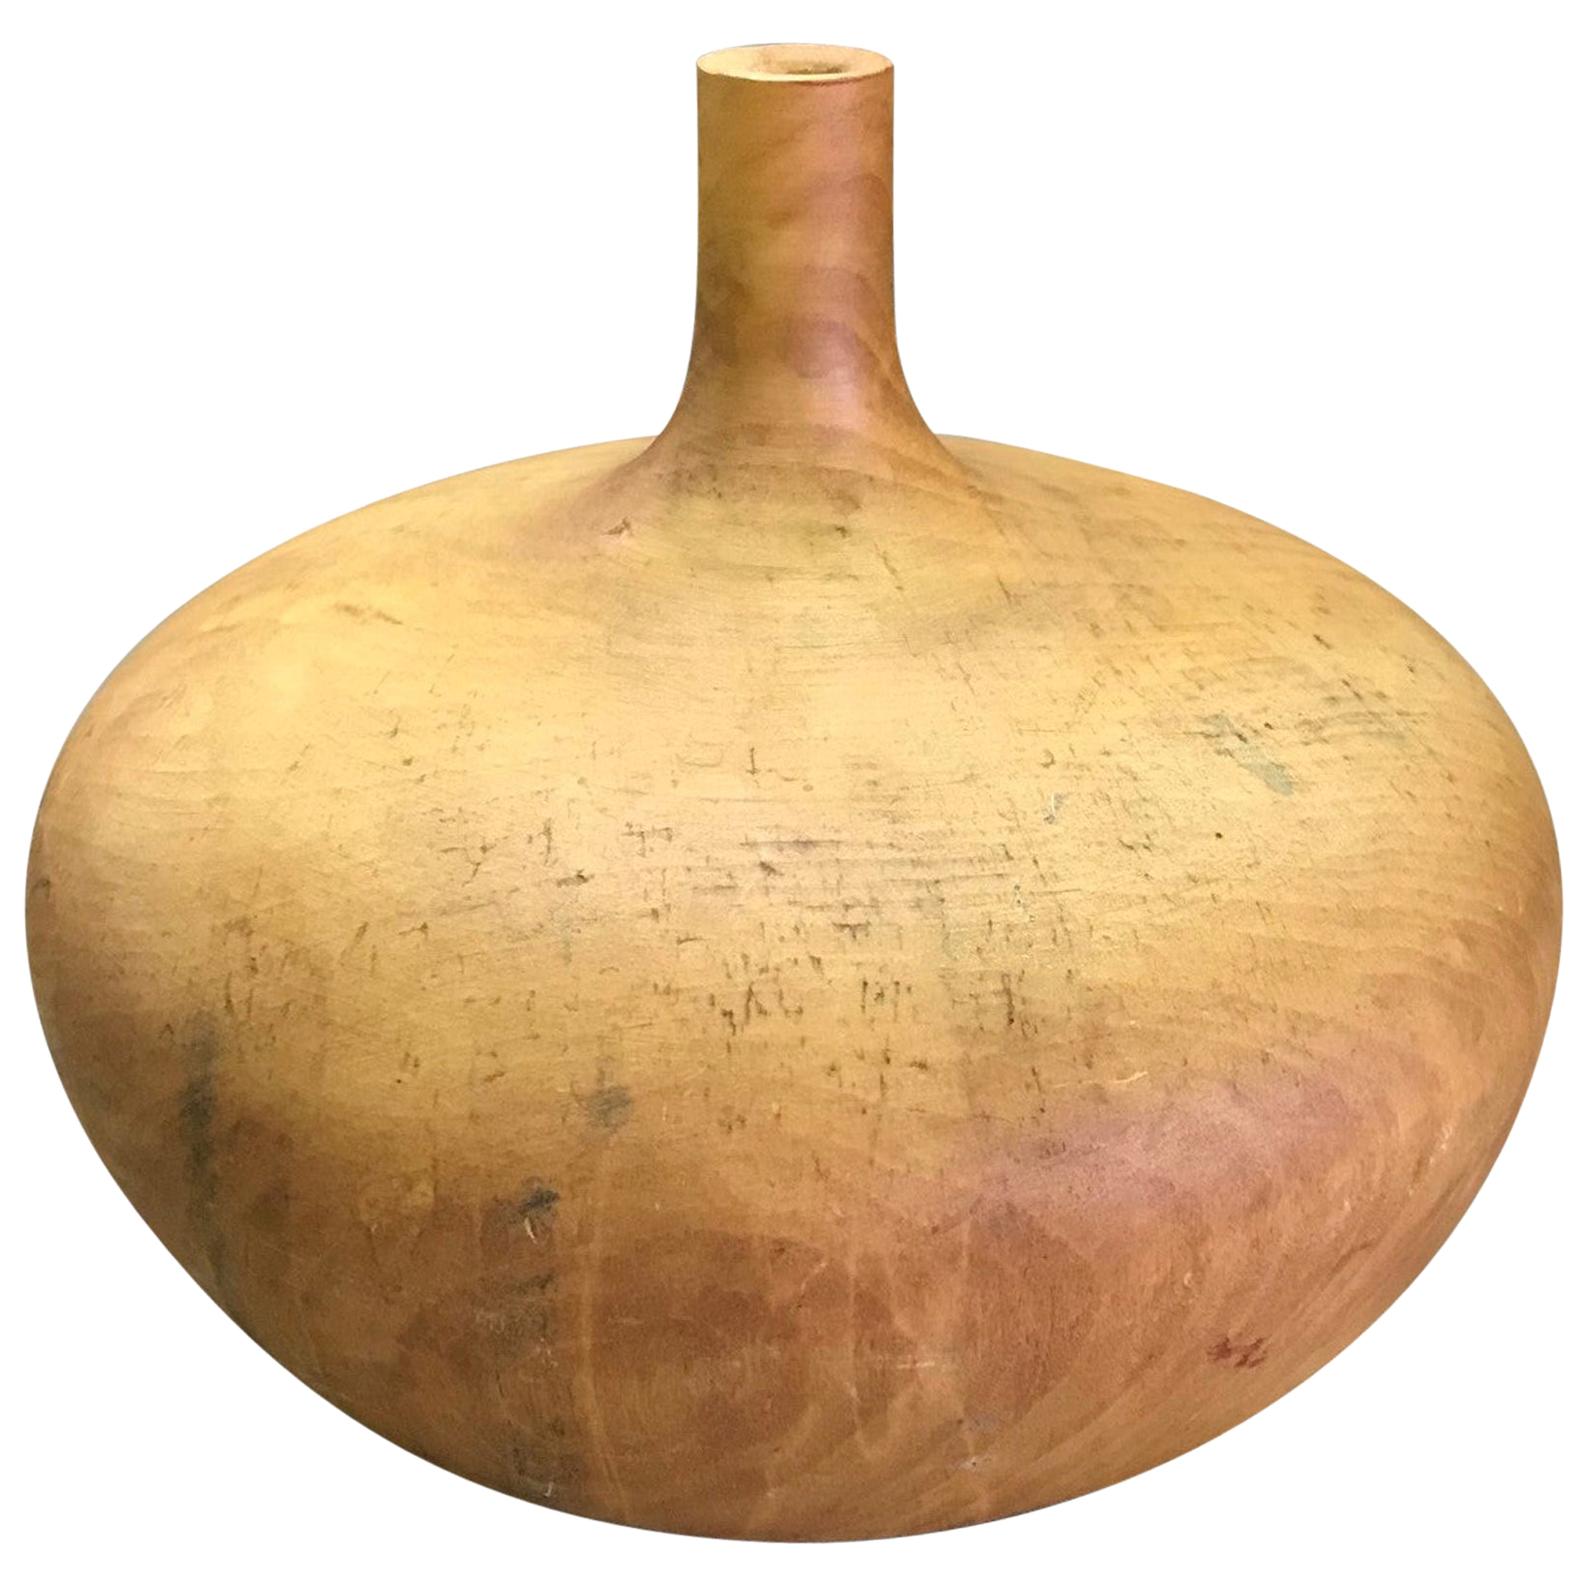 Rude Osolnik Signed Rare Large Pale Buckeye Wood Turned Vessel Bud Weed Vase